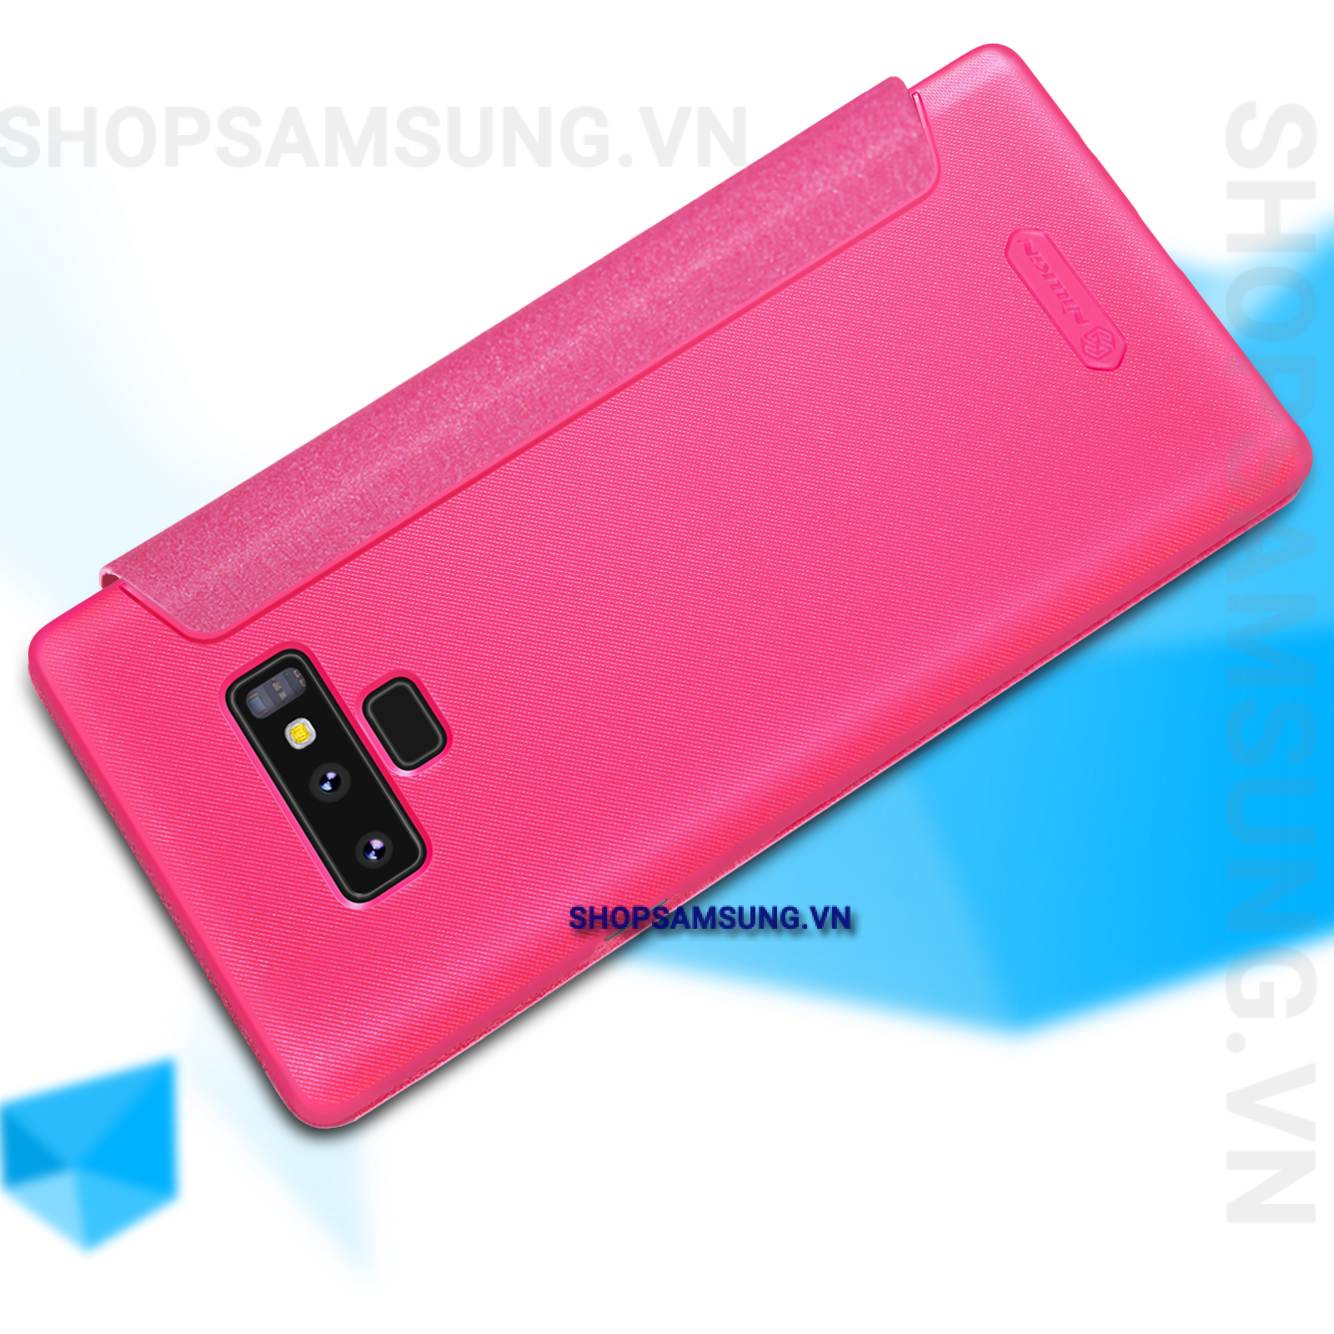 Samsung Galaxy Note 9 Nillkin Sparkle Leather Case 8 - Samsung Galaxy Note 9 Nillkin Sparkle Leather Case